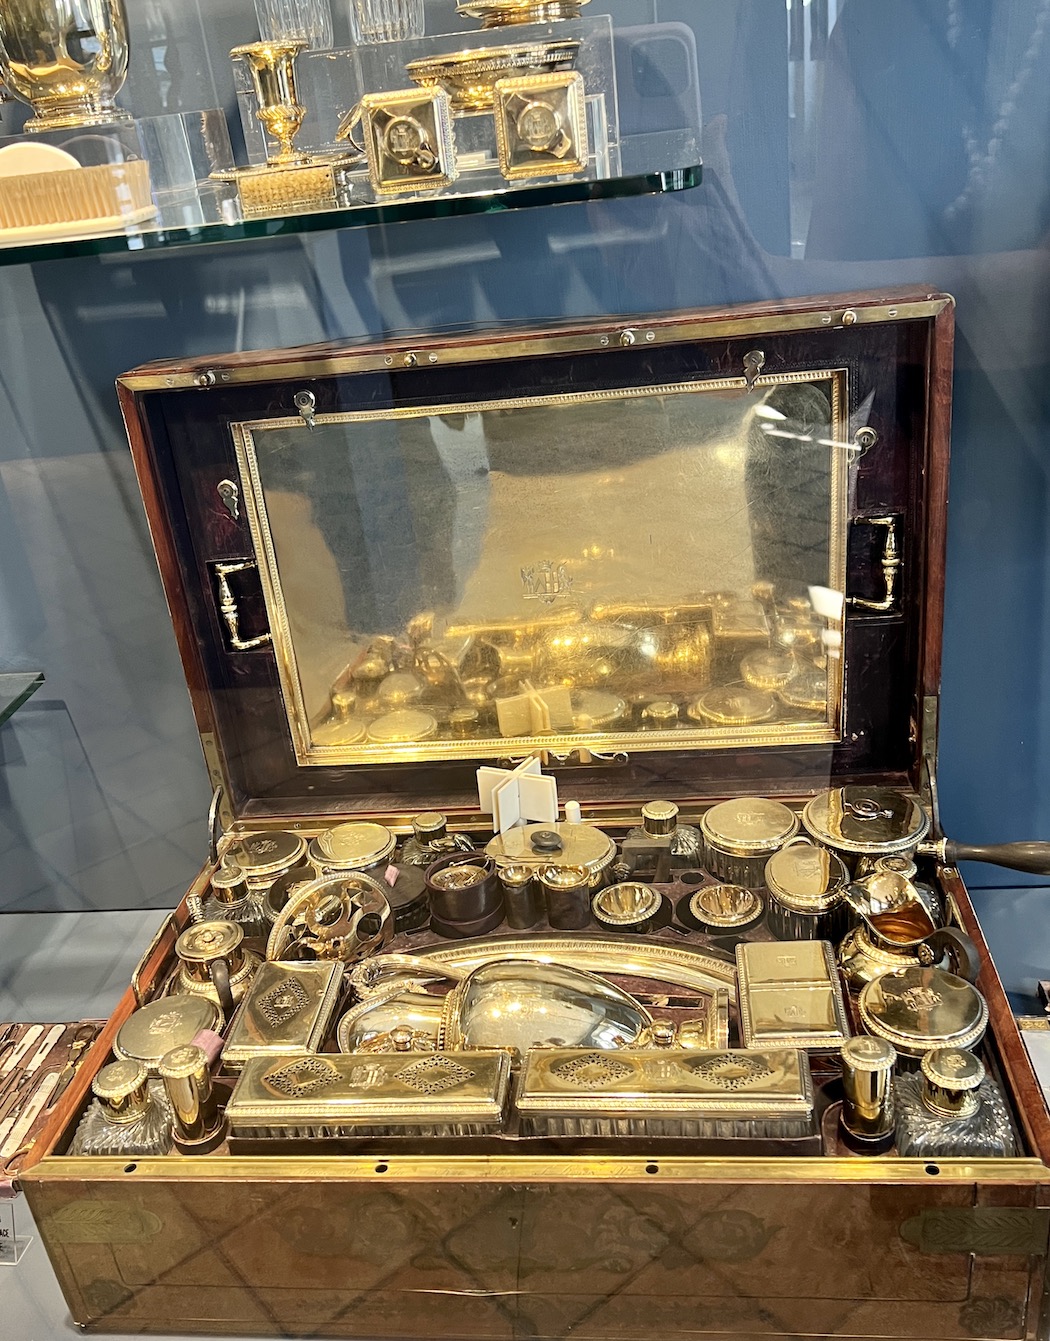 Perfume travelling case in Fragonard museum